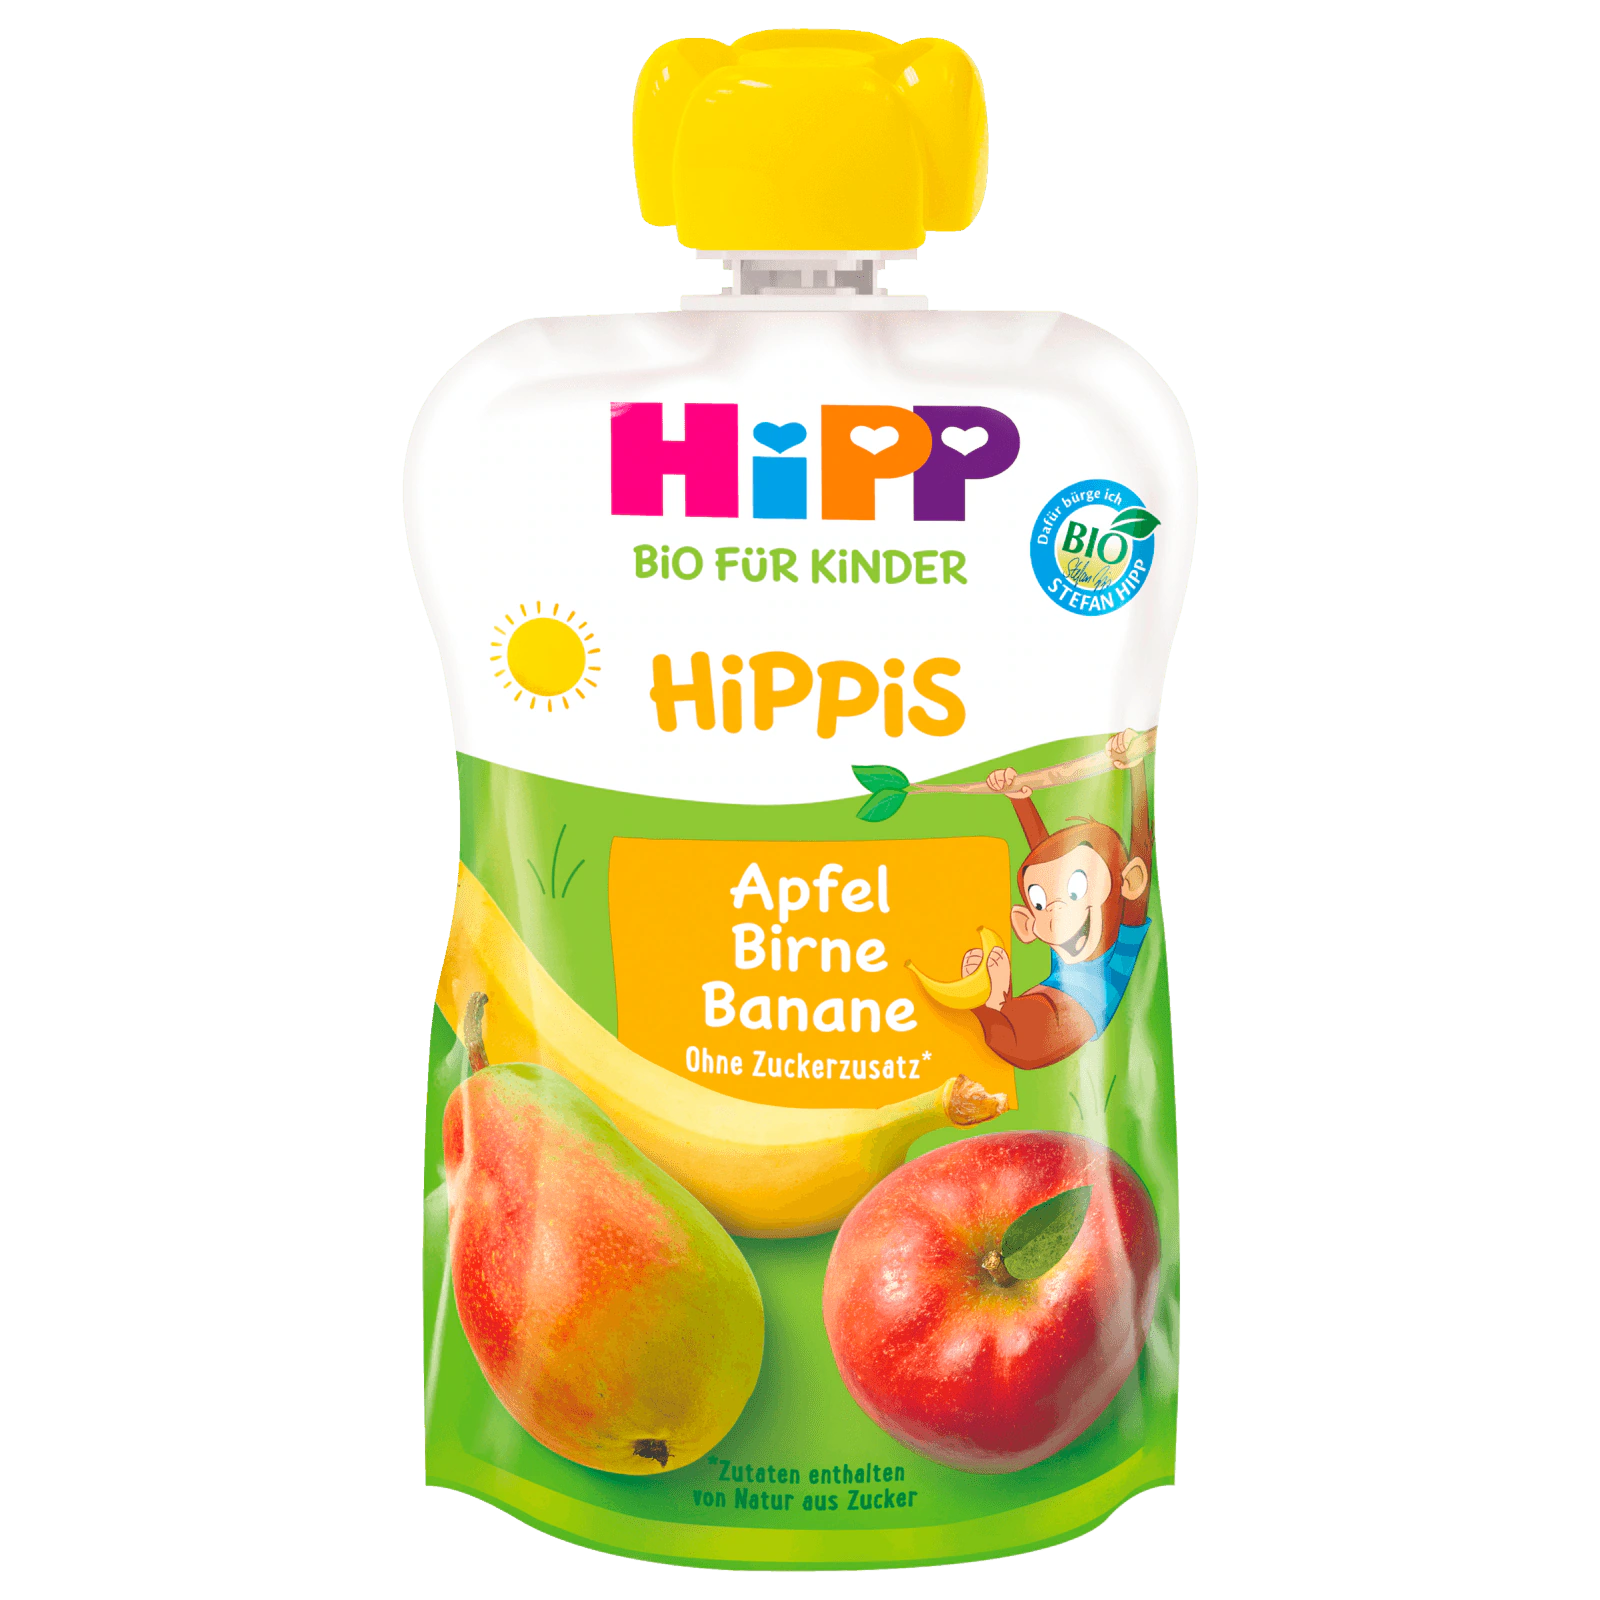 Hipp Hippis Anton Affe Bio Apfel-Birne-Banane 100g